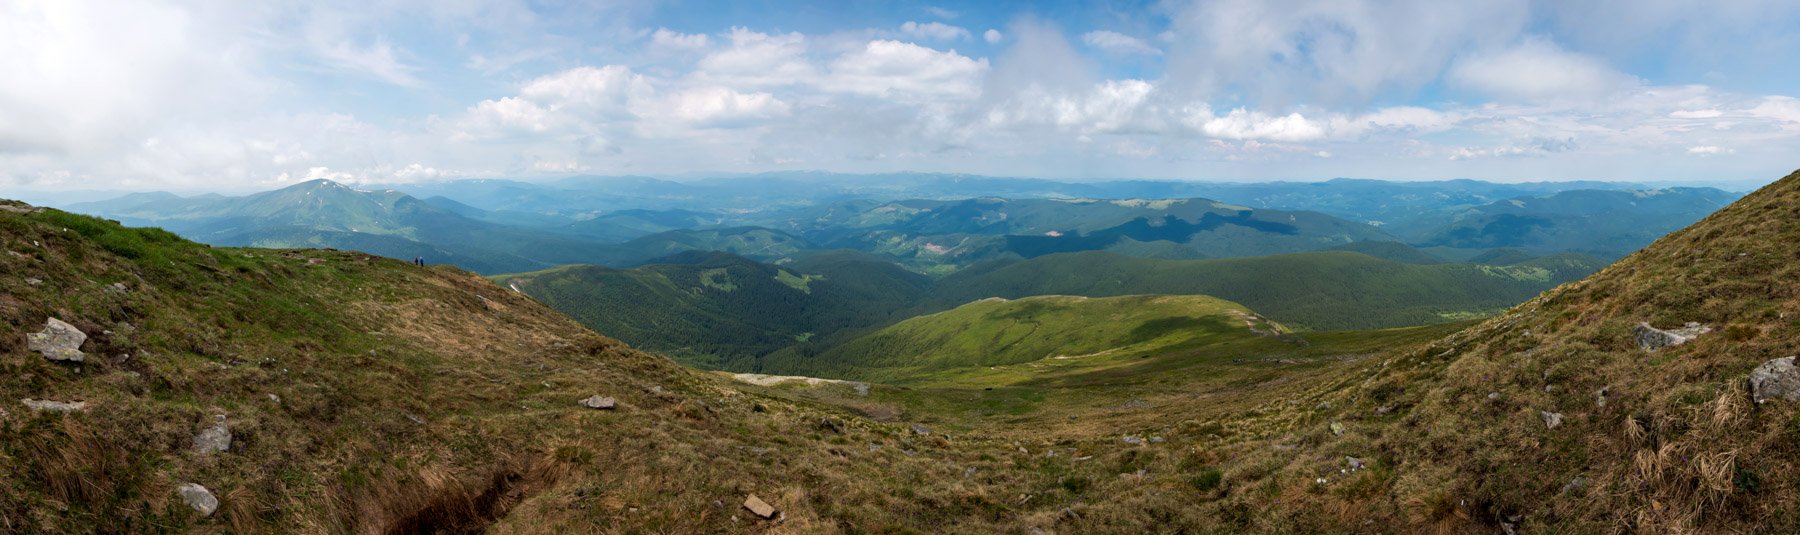 говерла, карпаты, горы, вершина, панорама, Анна Иванова